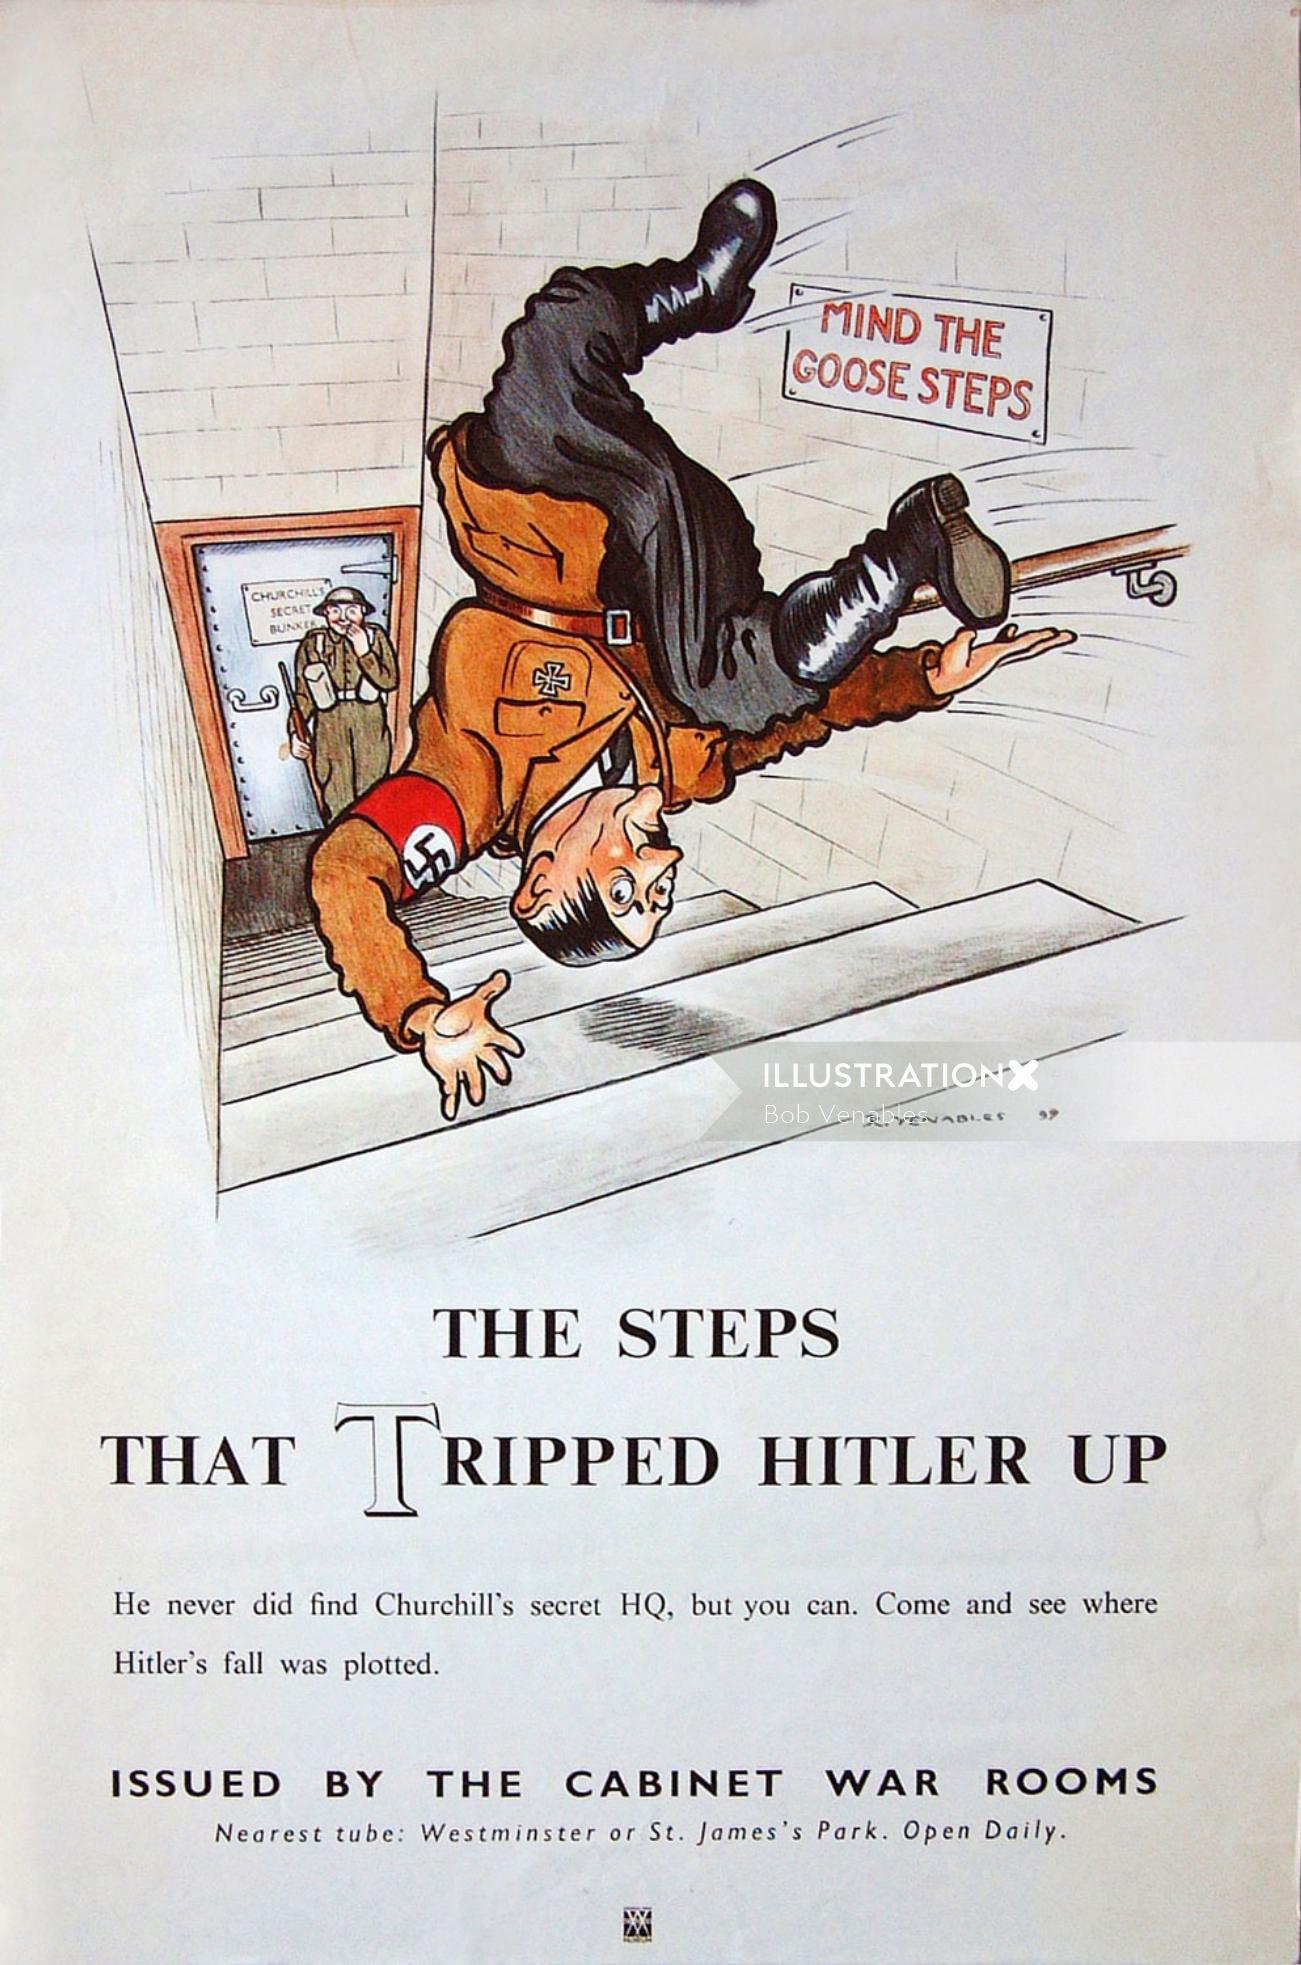 Arte do pôster de That Trapped Hitler Up